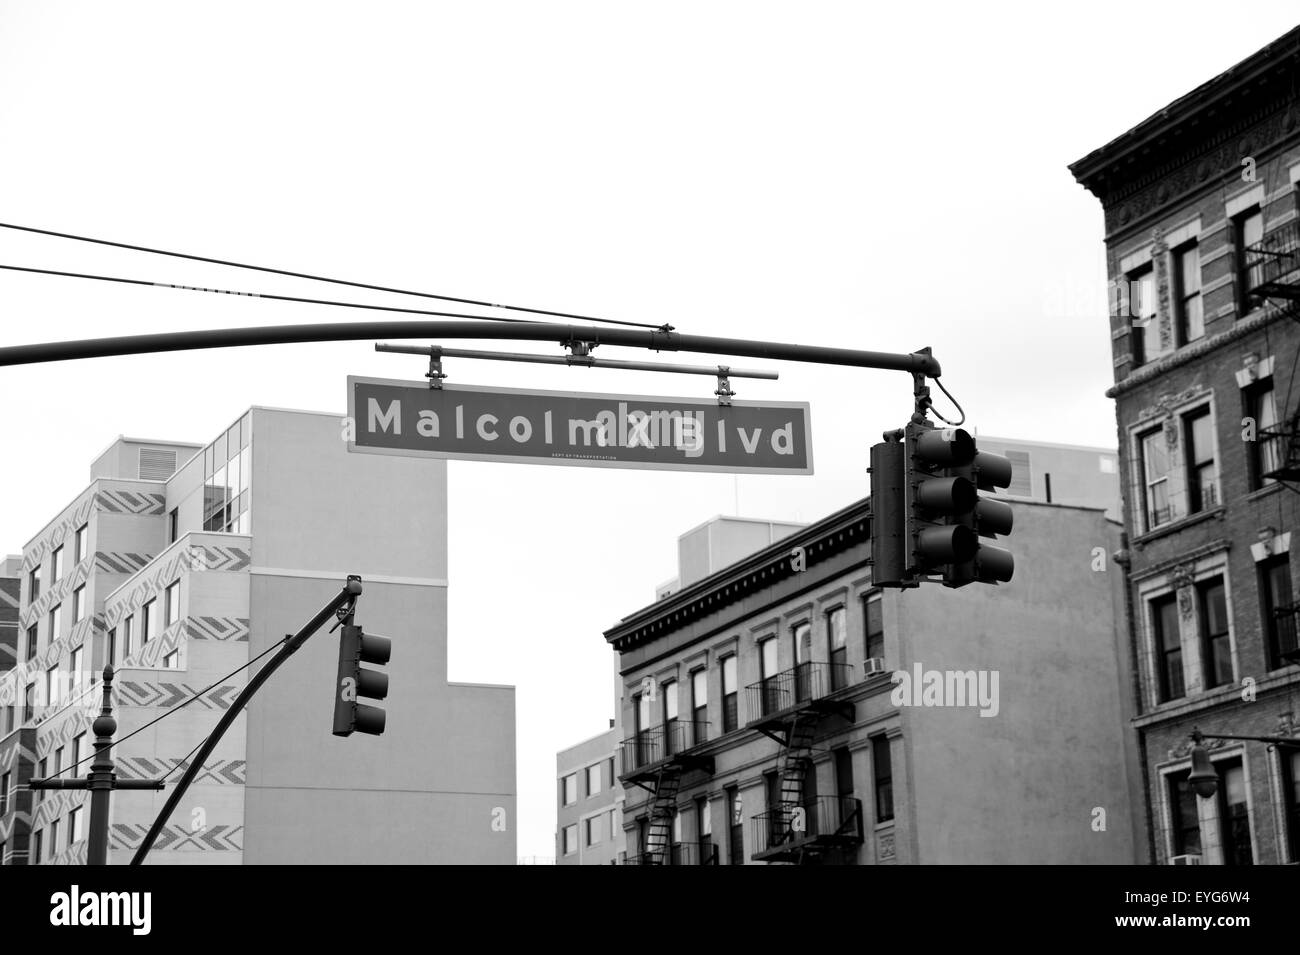 New York – Black & White  Rebelone – Photography, Videography